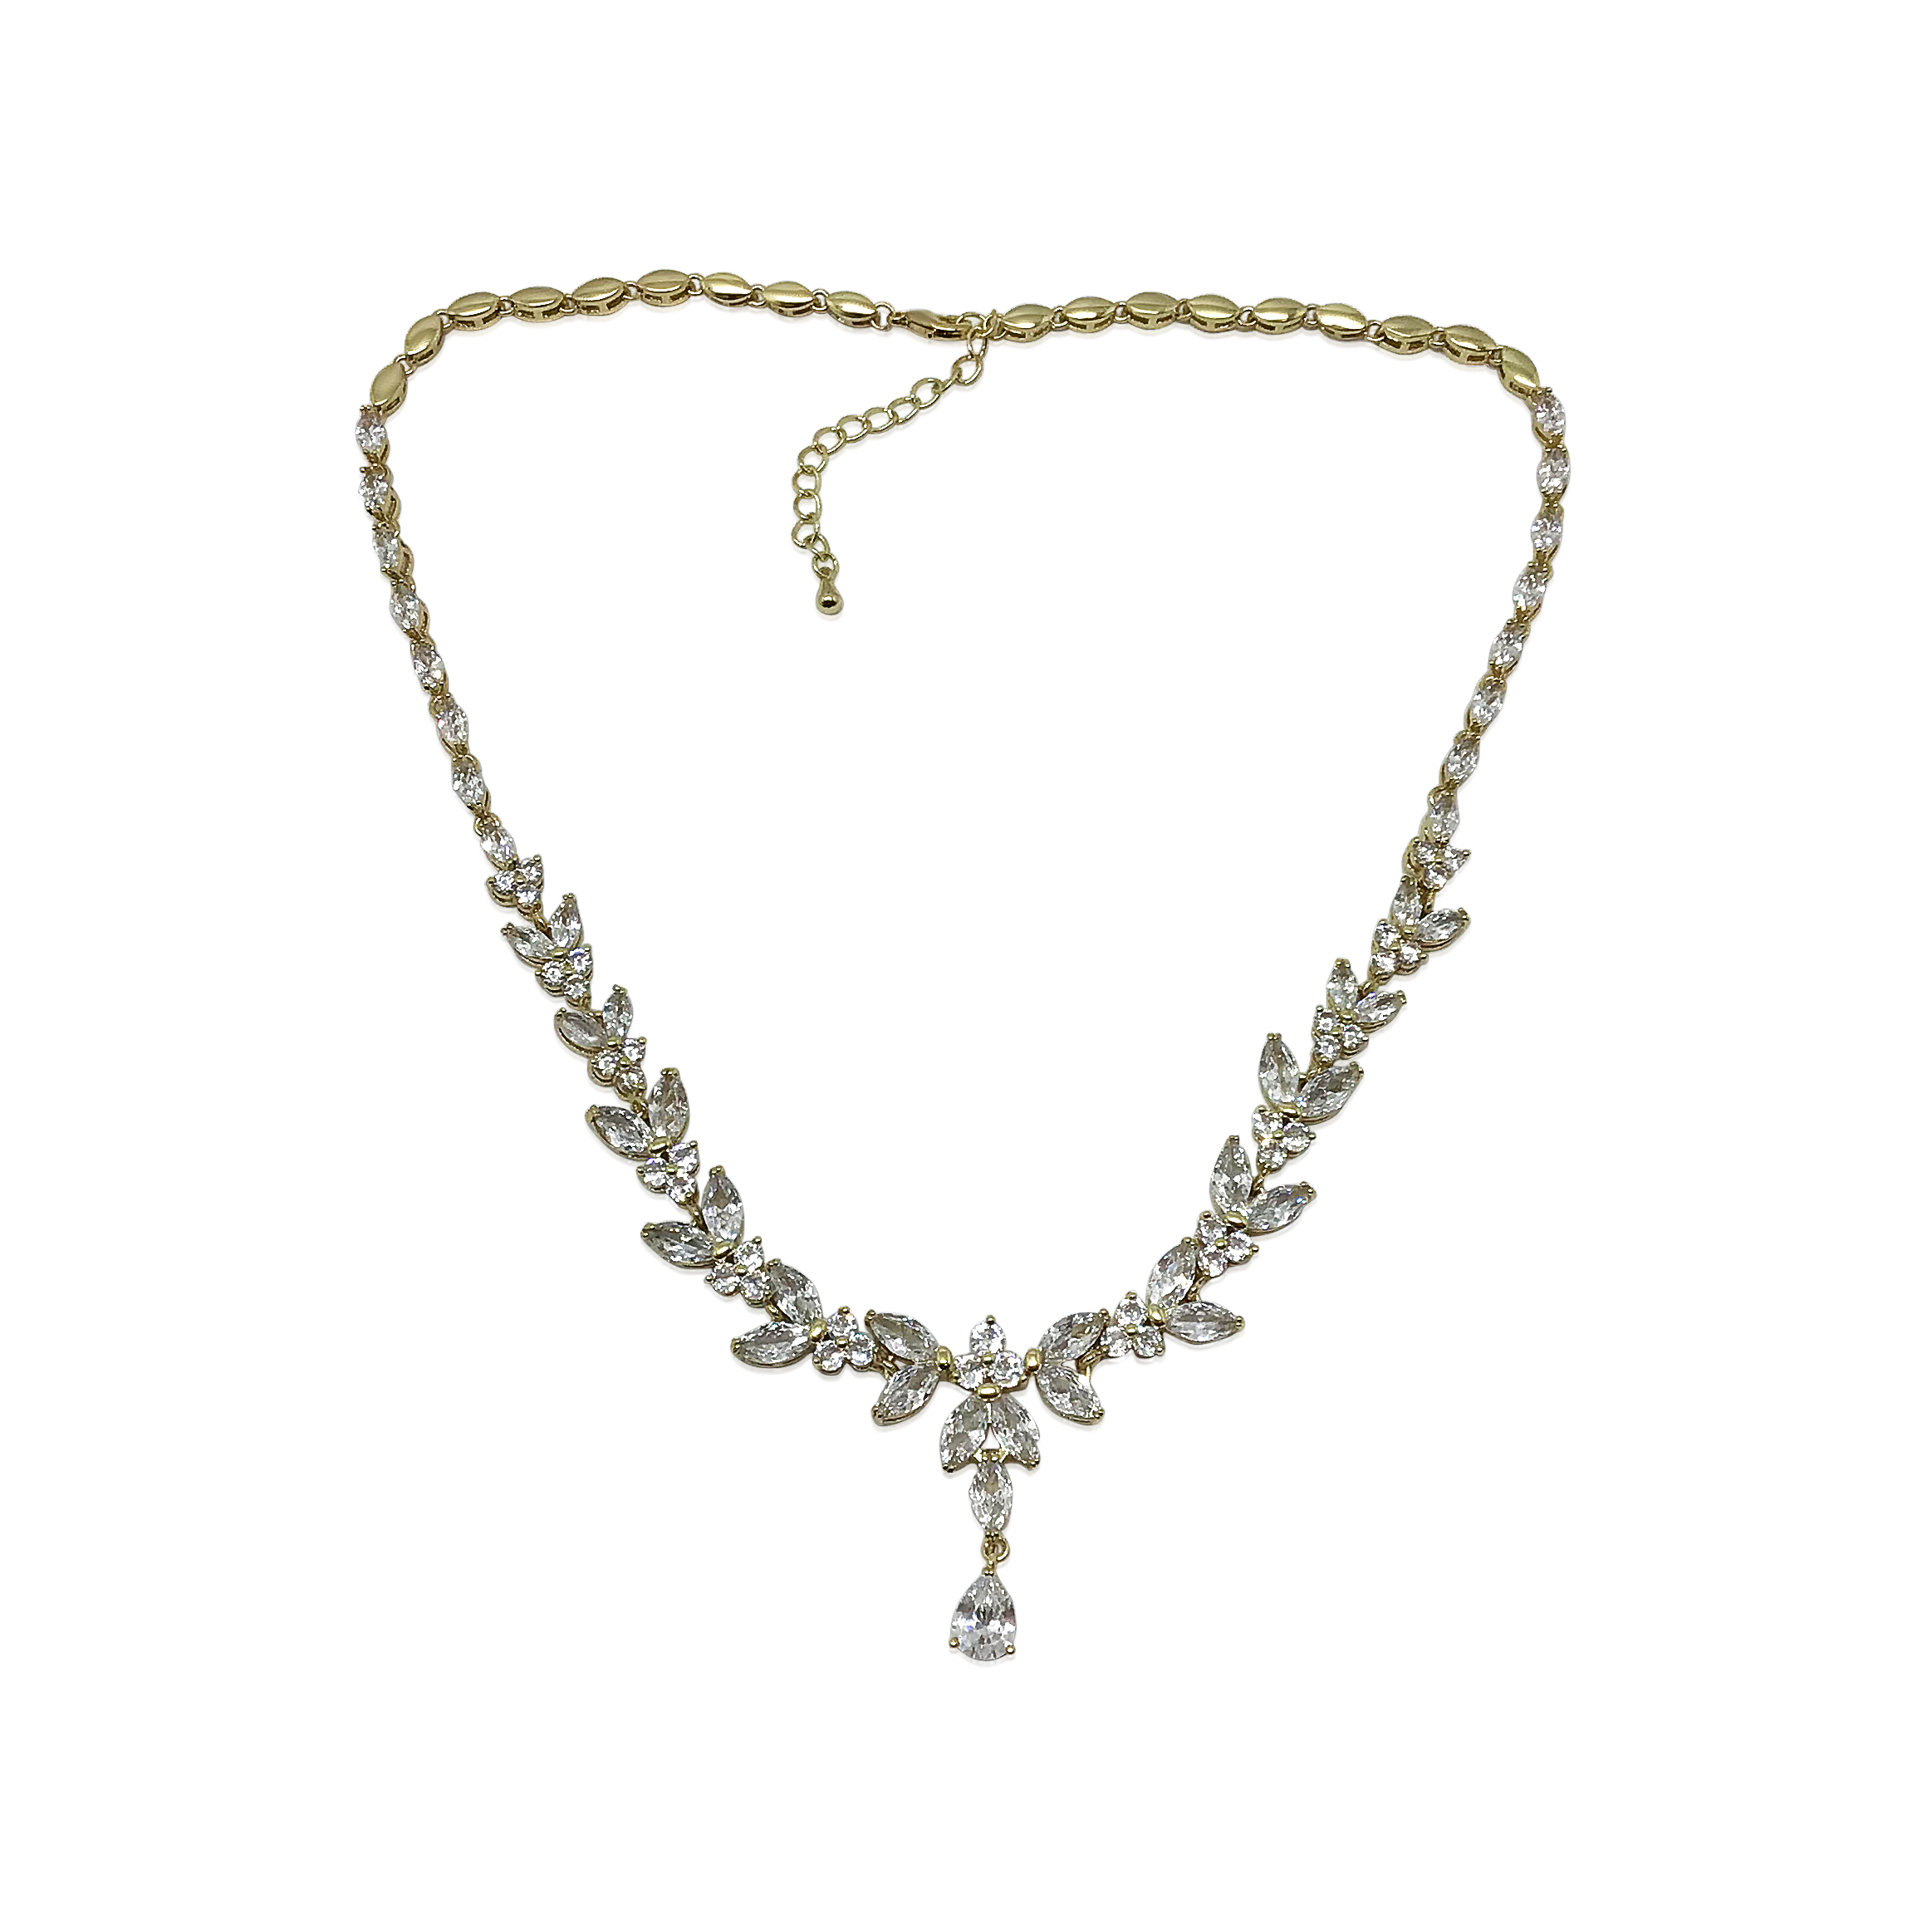 diamond pendant necklace| Brenda I Jeanette Maree|Shop online now